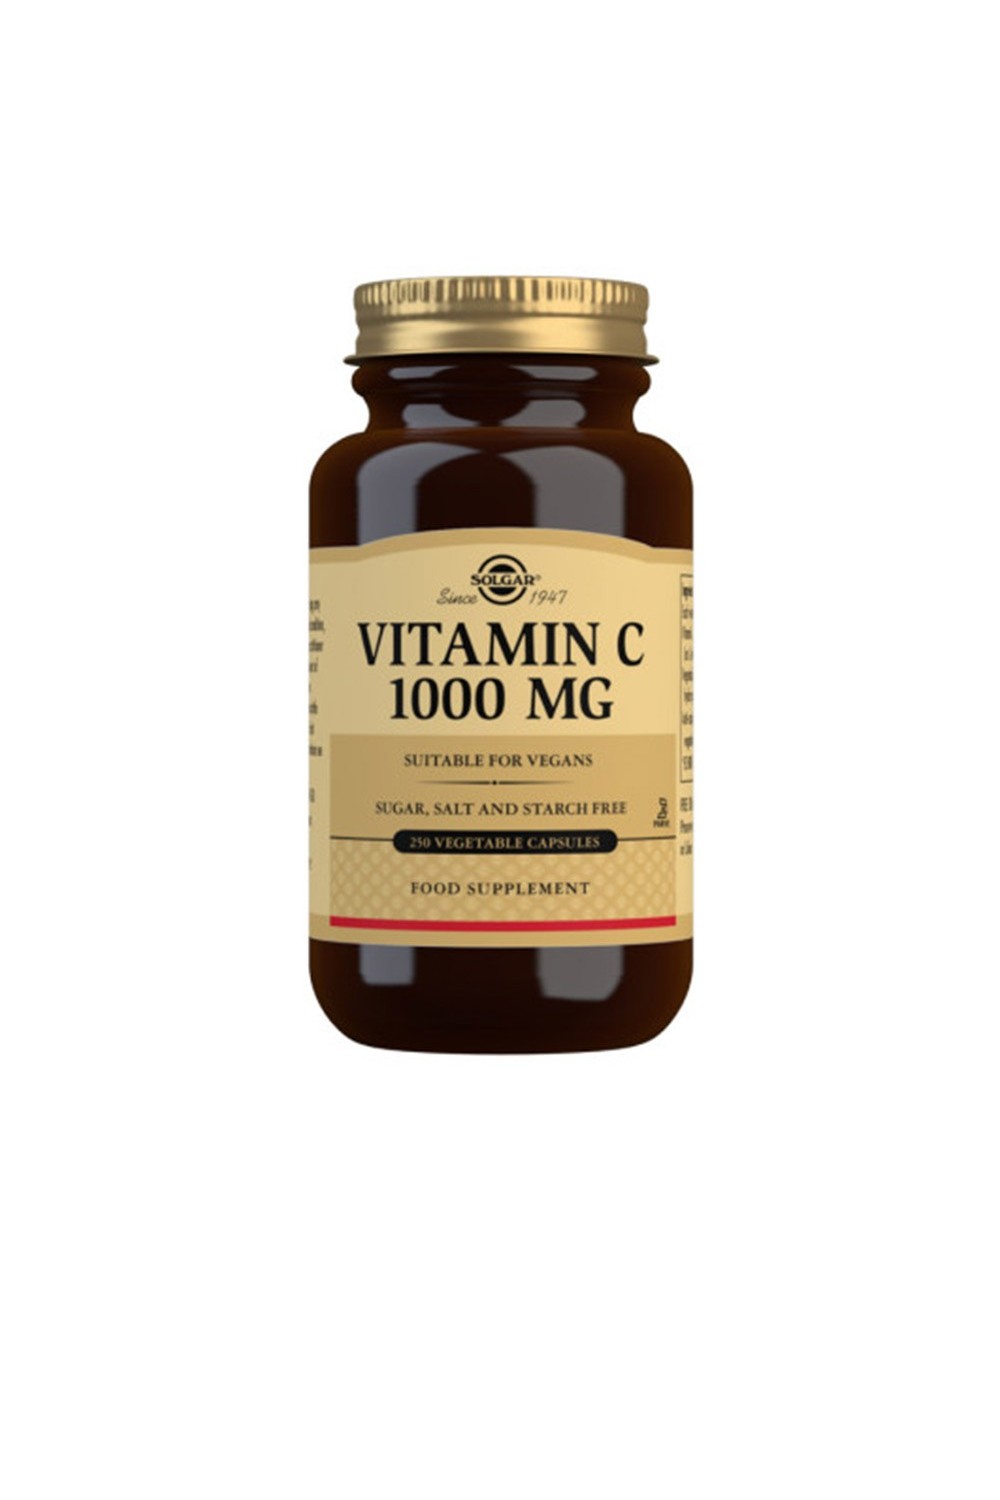 Solgar Vitamin C 1000 mg Vegetable Capsules - Pack of 250